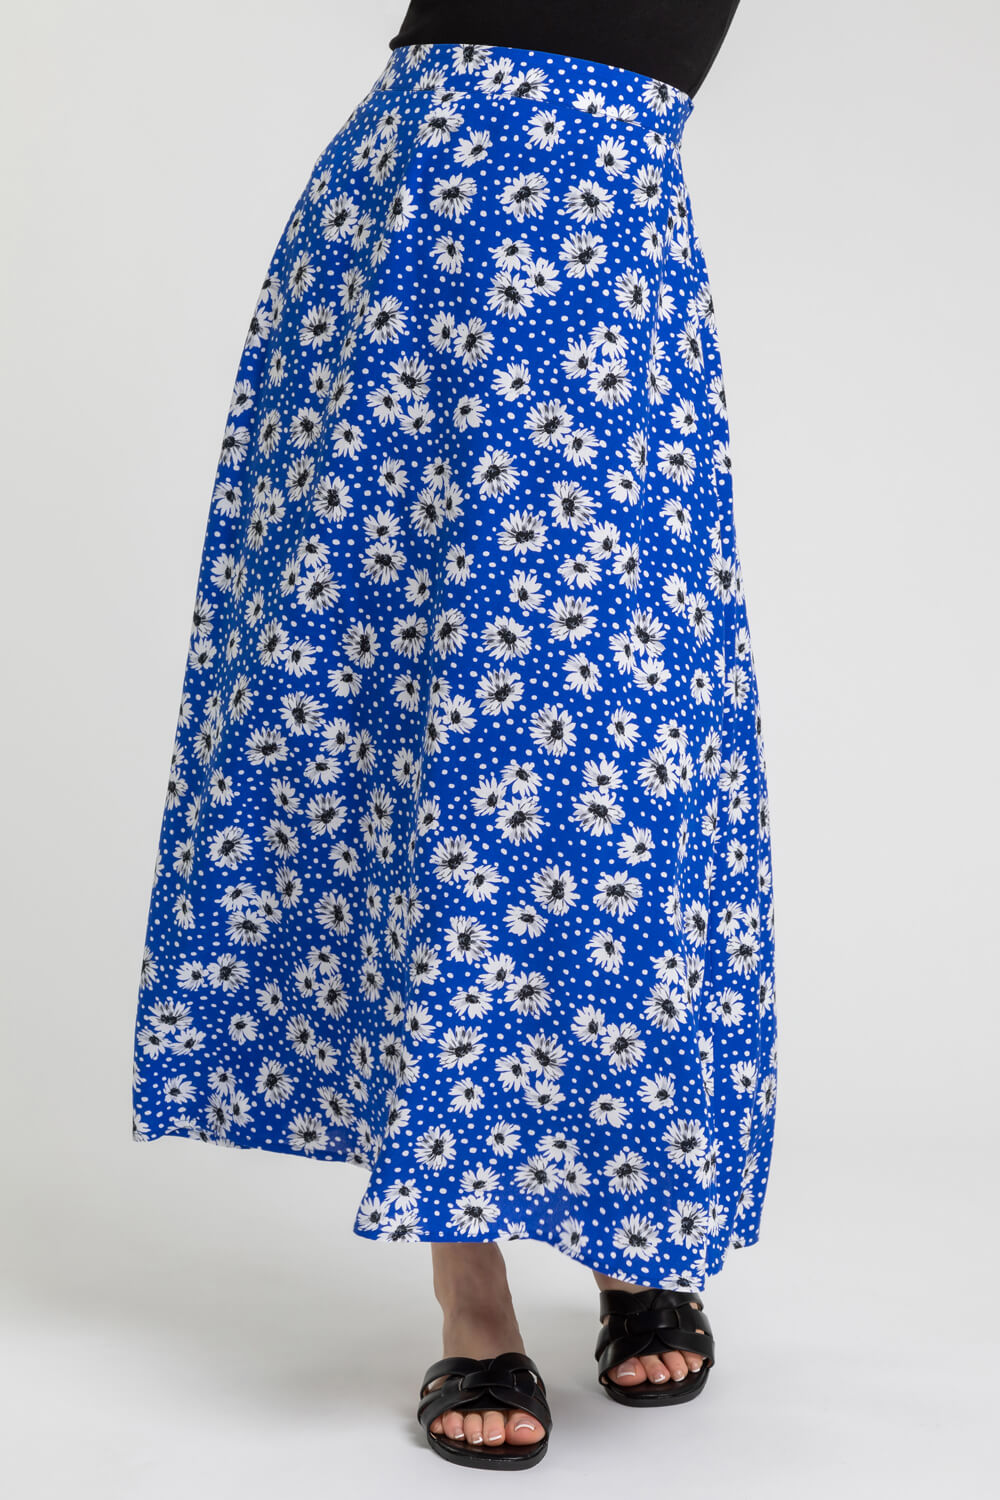 Petite Floral Print A-Line Skirt